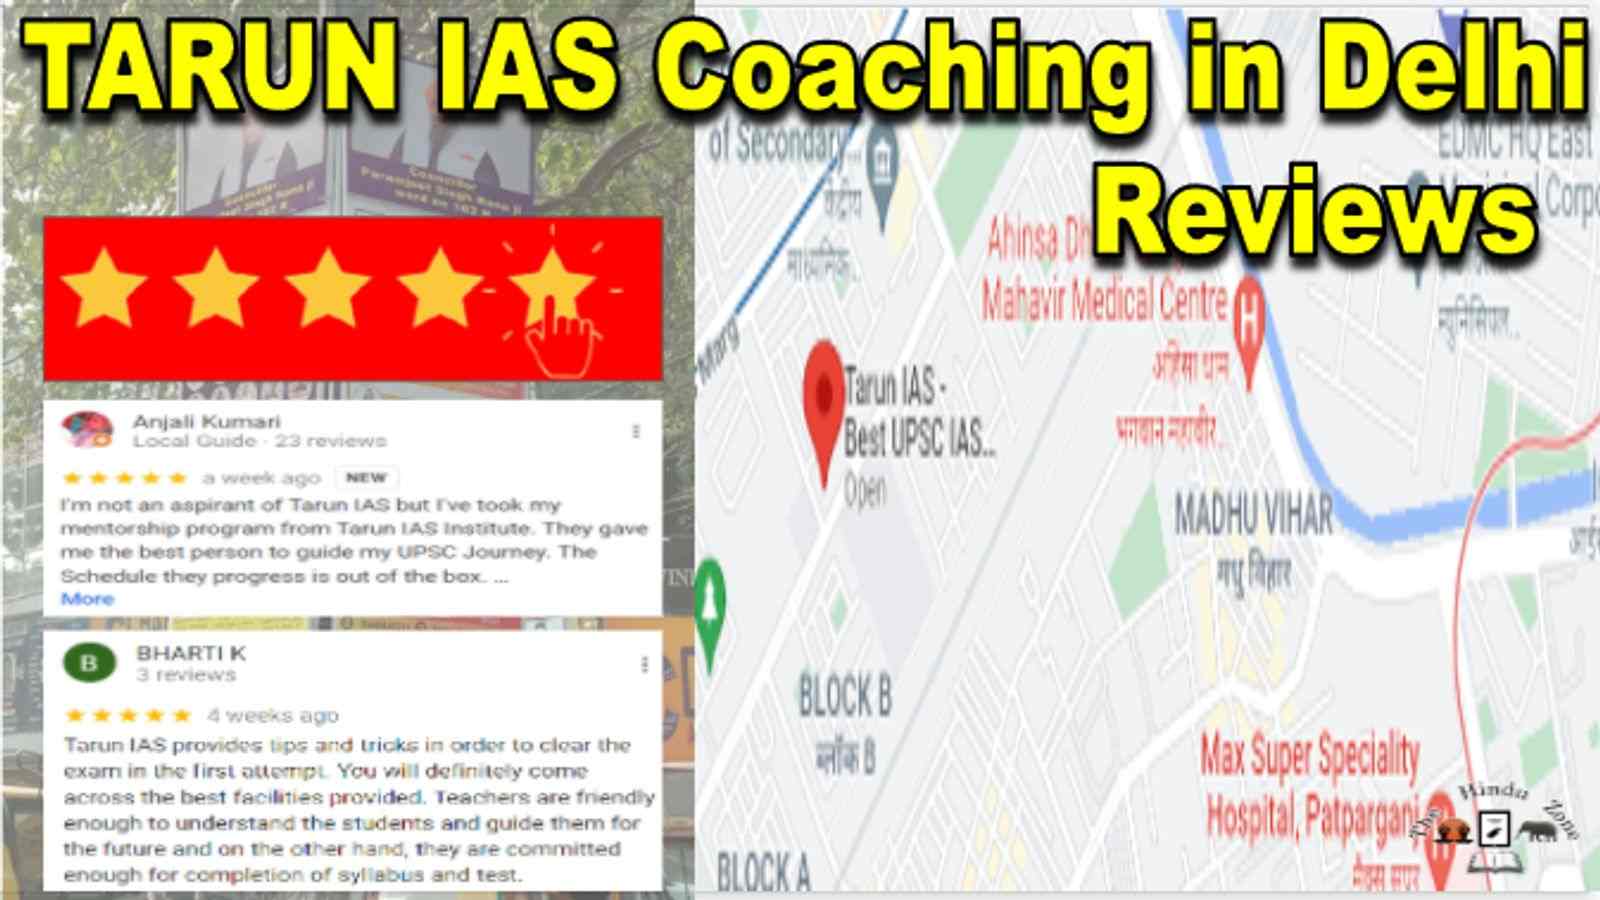 Tarun IAS Coaching in Delhi Reviews